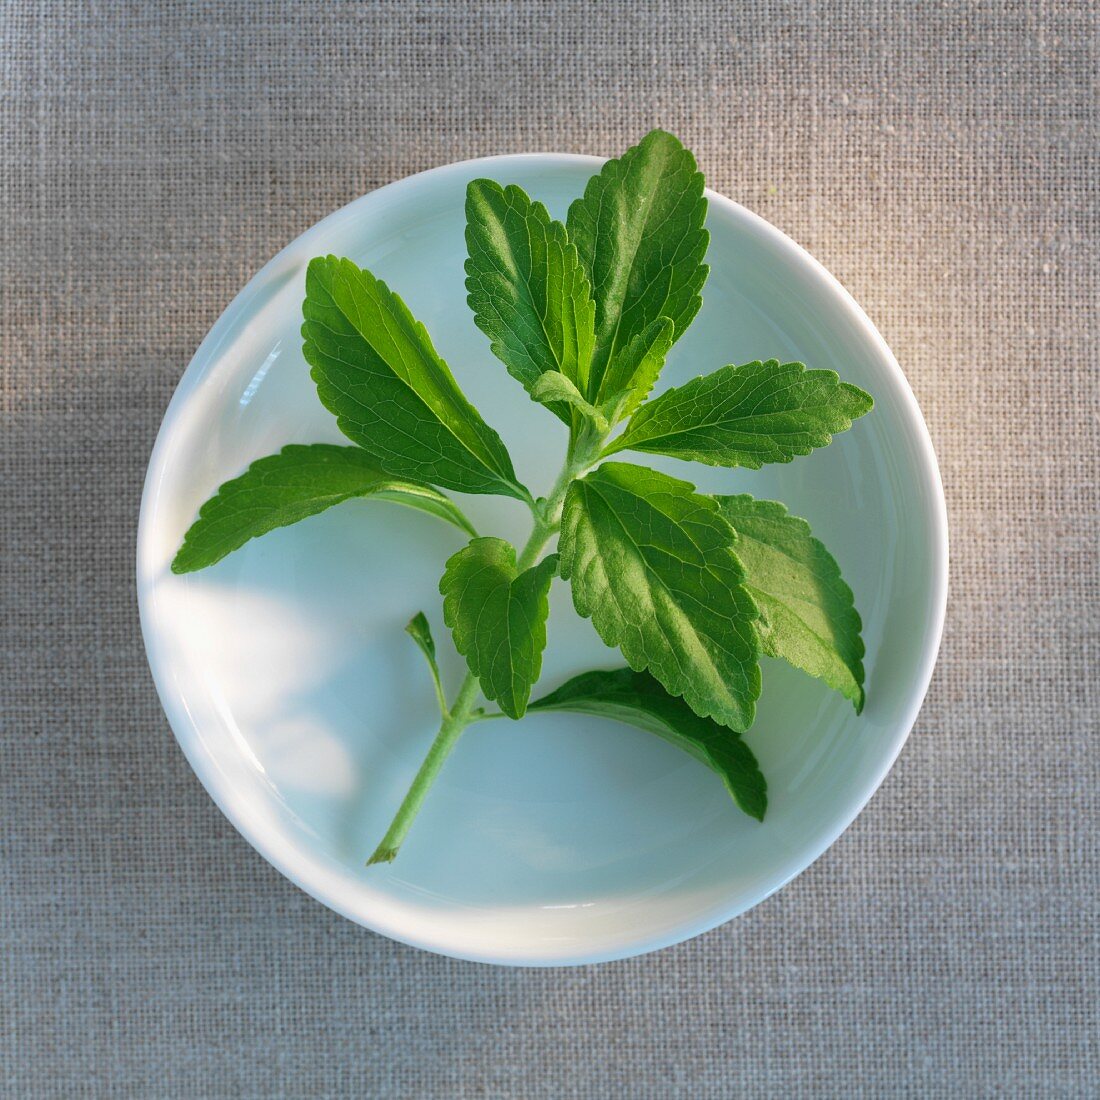 A sprig of stevia on a plate